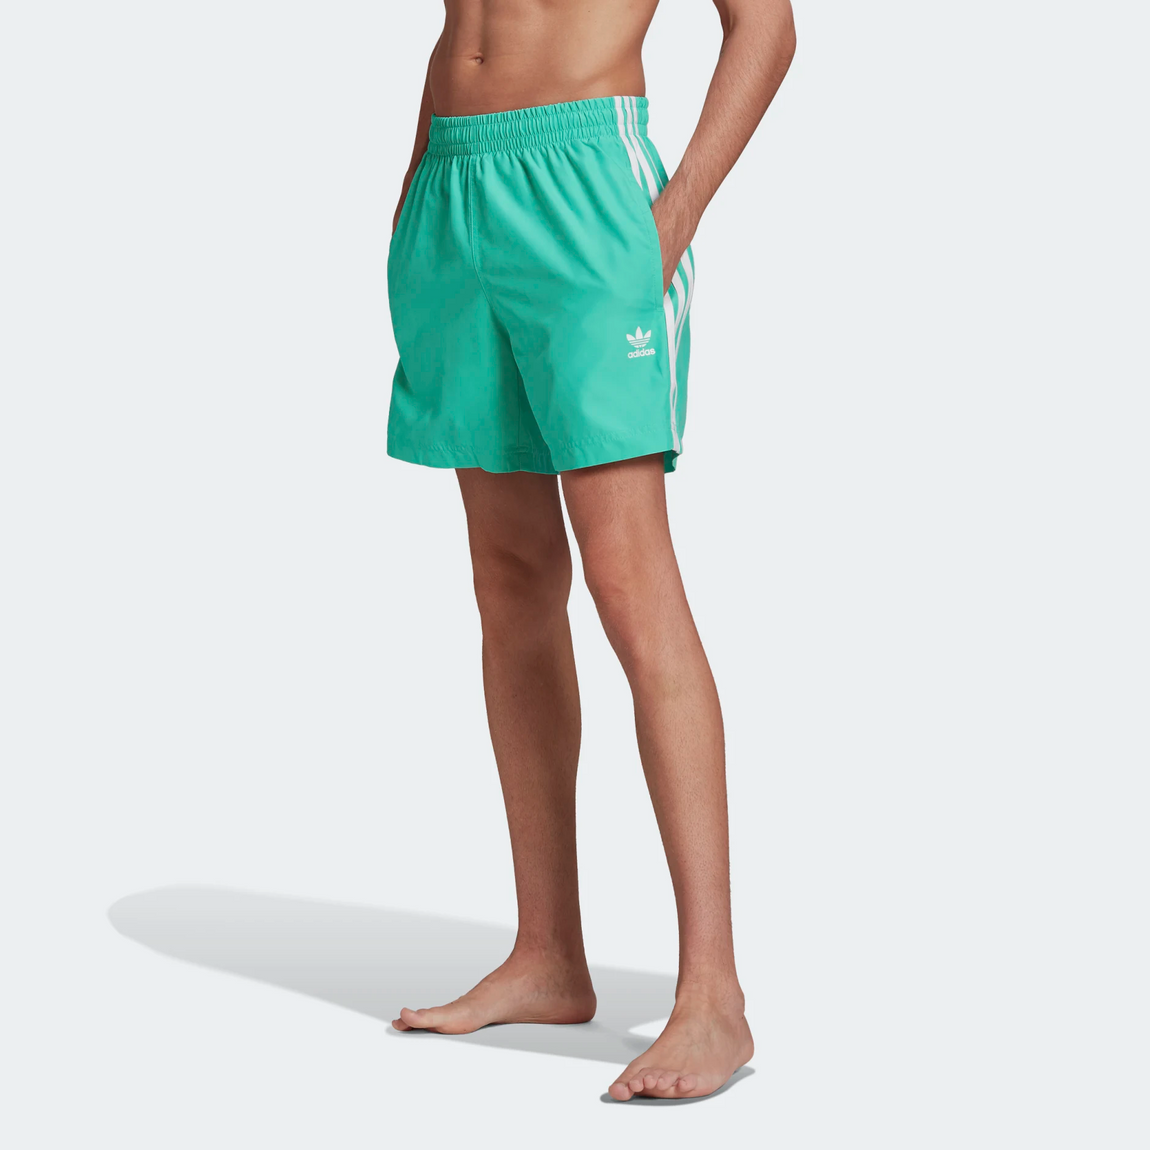 Adidas Classics 3-Stripes Swim Shorts (Hi-Res Green/White) - Adidas Classics 3-Stripes Swim Shorts (Hi-Res Green/White) - 